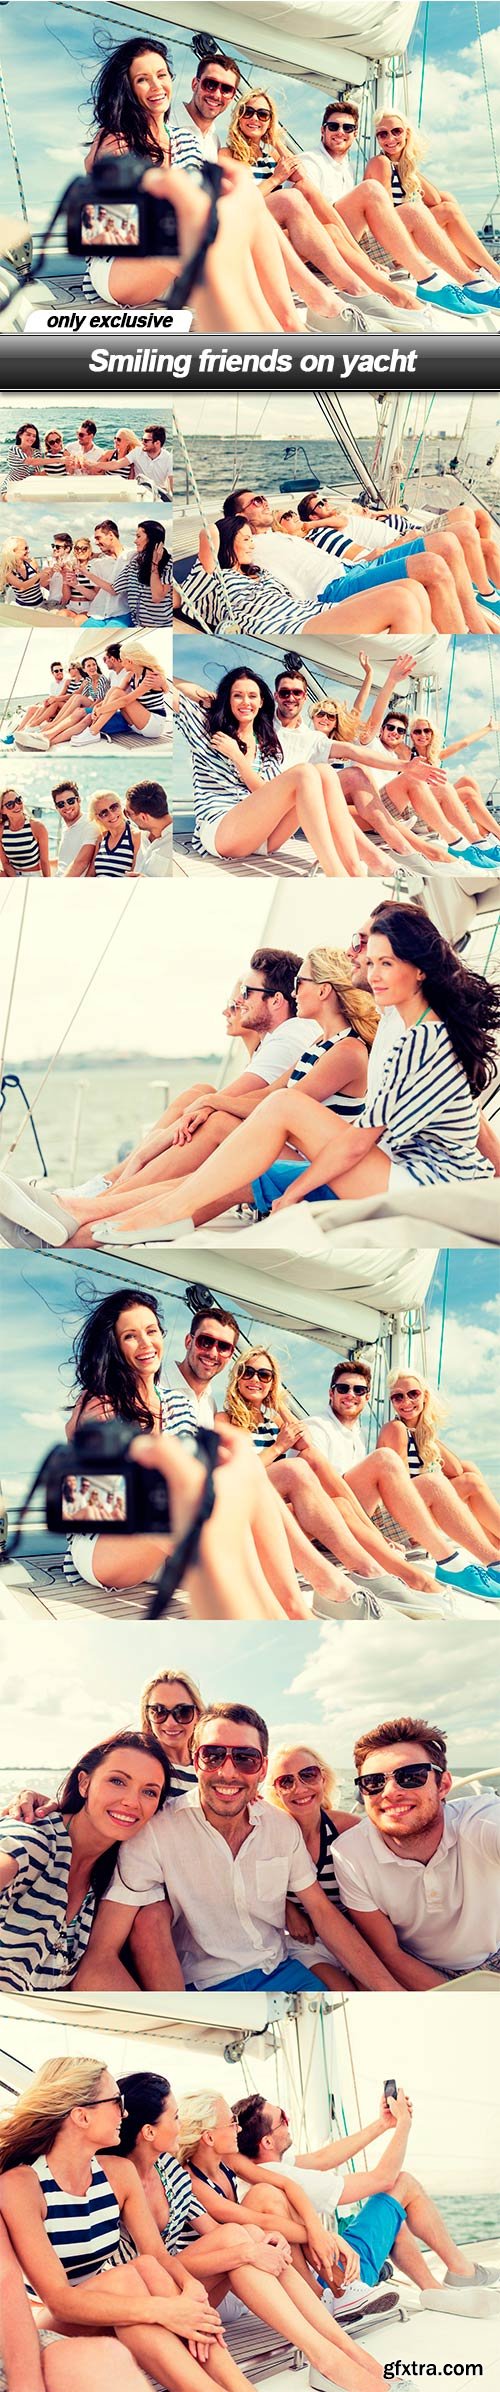 Smiling friends on yacht - 10 UHQ JPEG